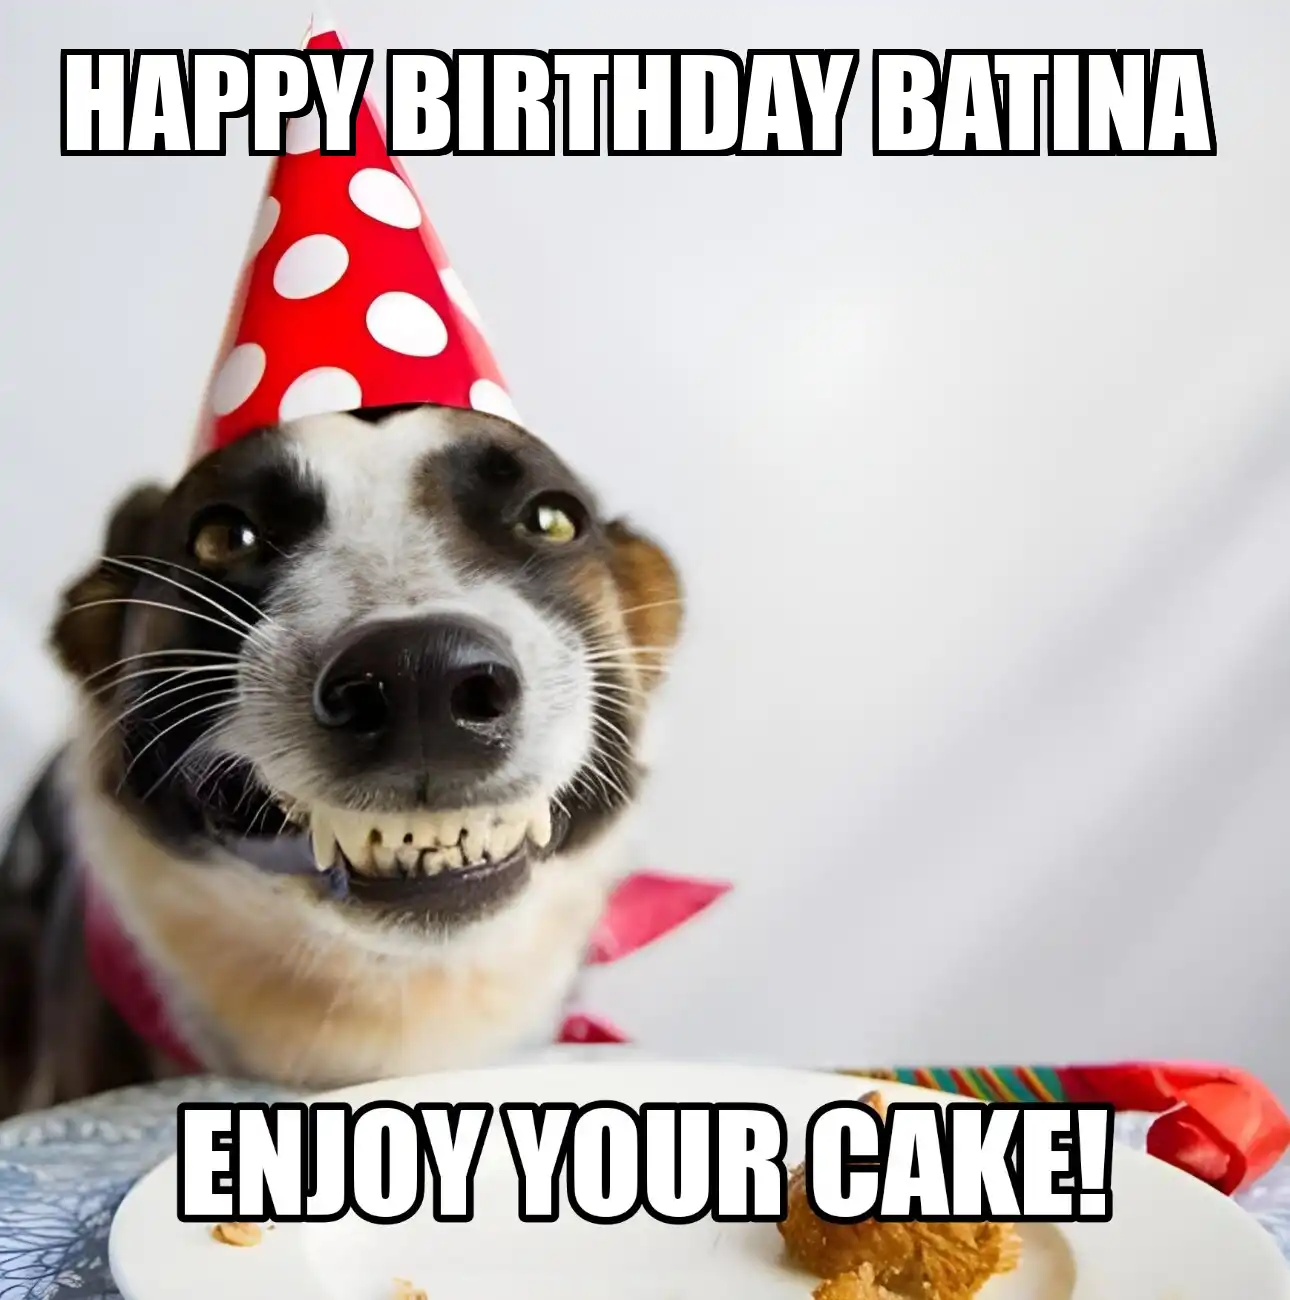 Happy Birthday Batina Enjoy Your Cake Dog Meme